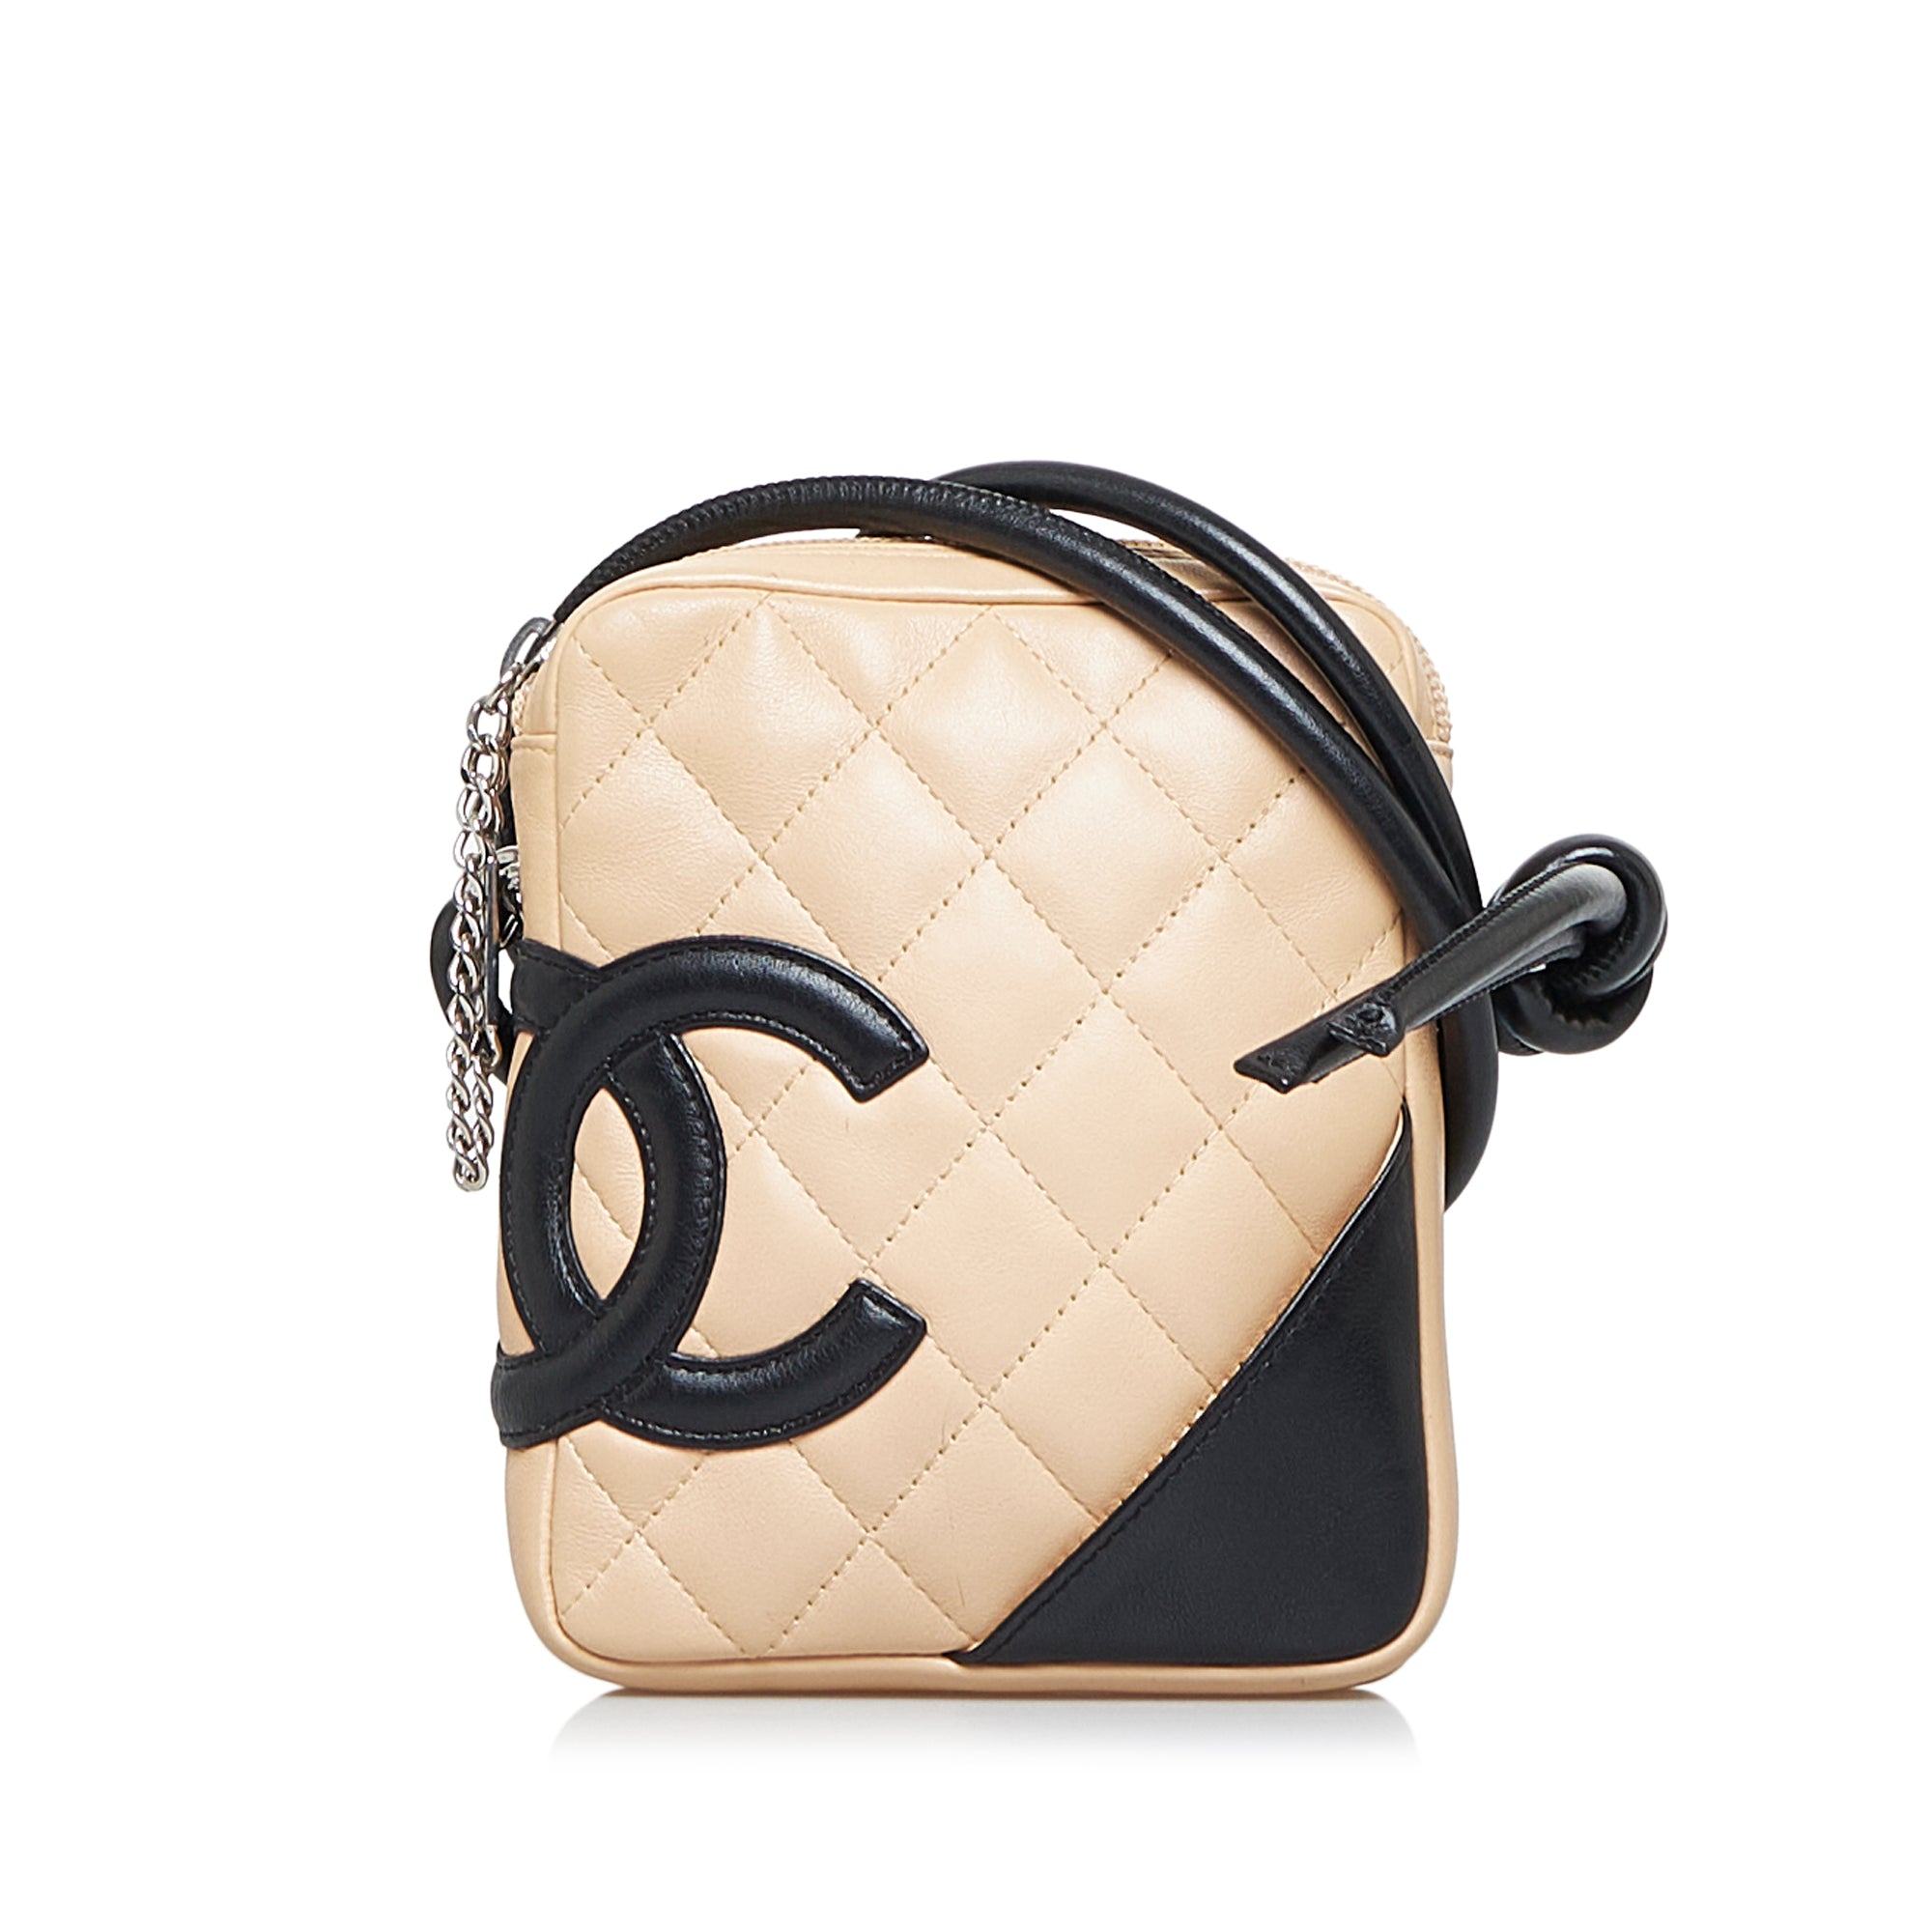 CHANEL Chanel Tote Bag Leather Camel Brown Mocha Mini Quilted Handbag Boston